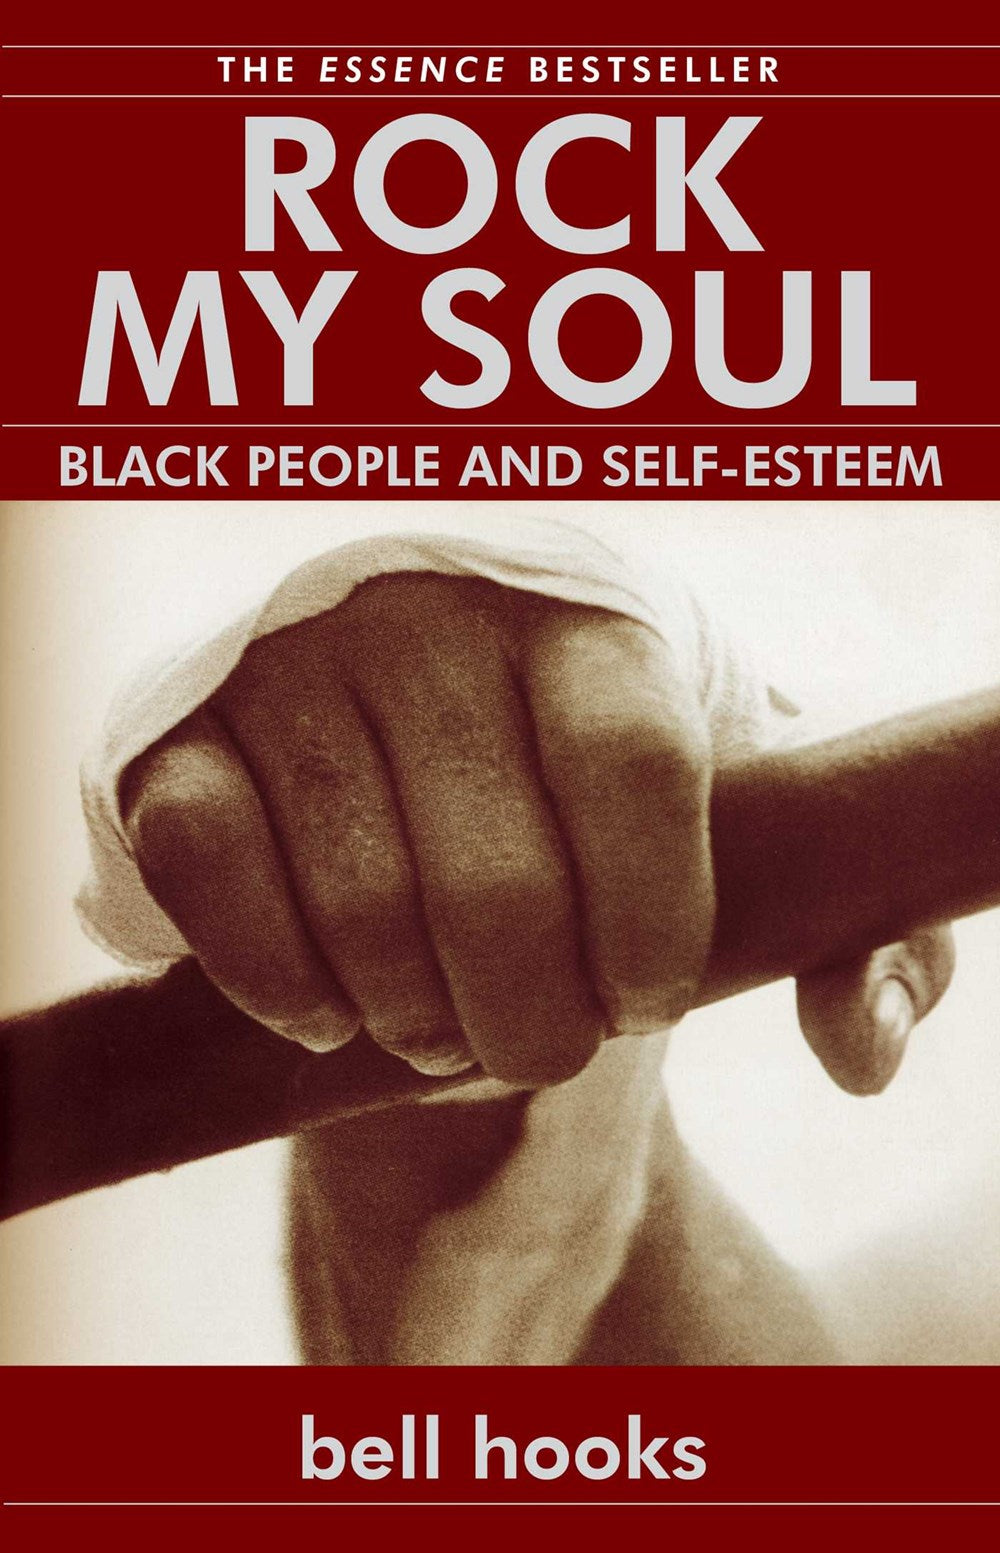 Rock My Soul: Black People and Self-Esteem by bell hooks